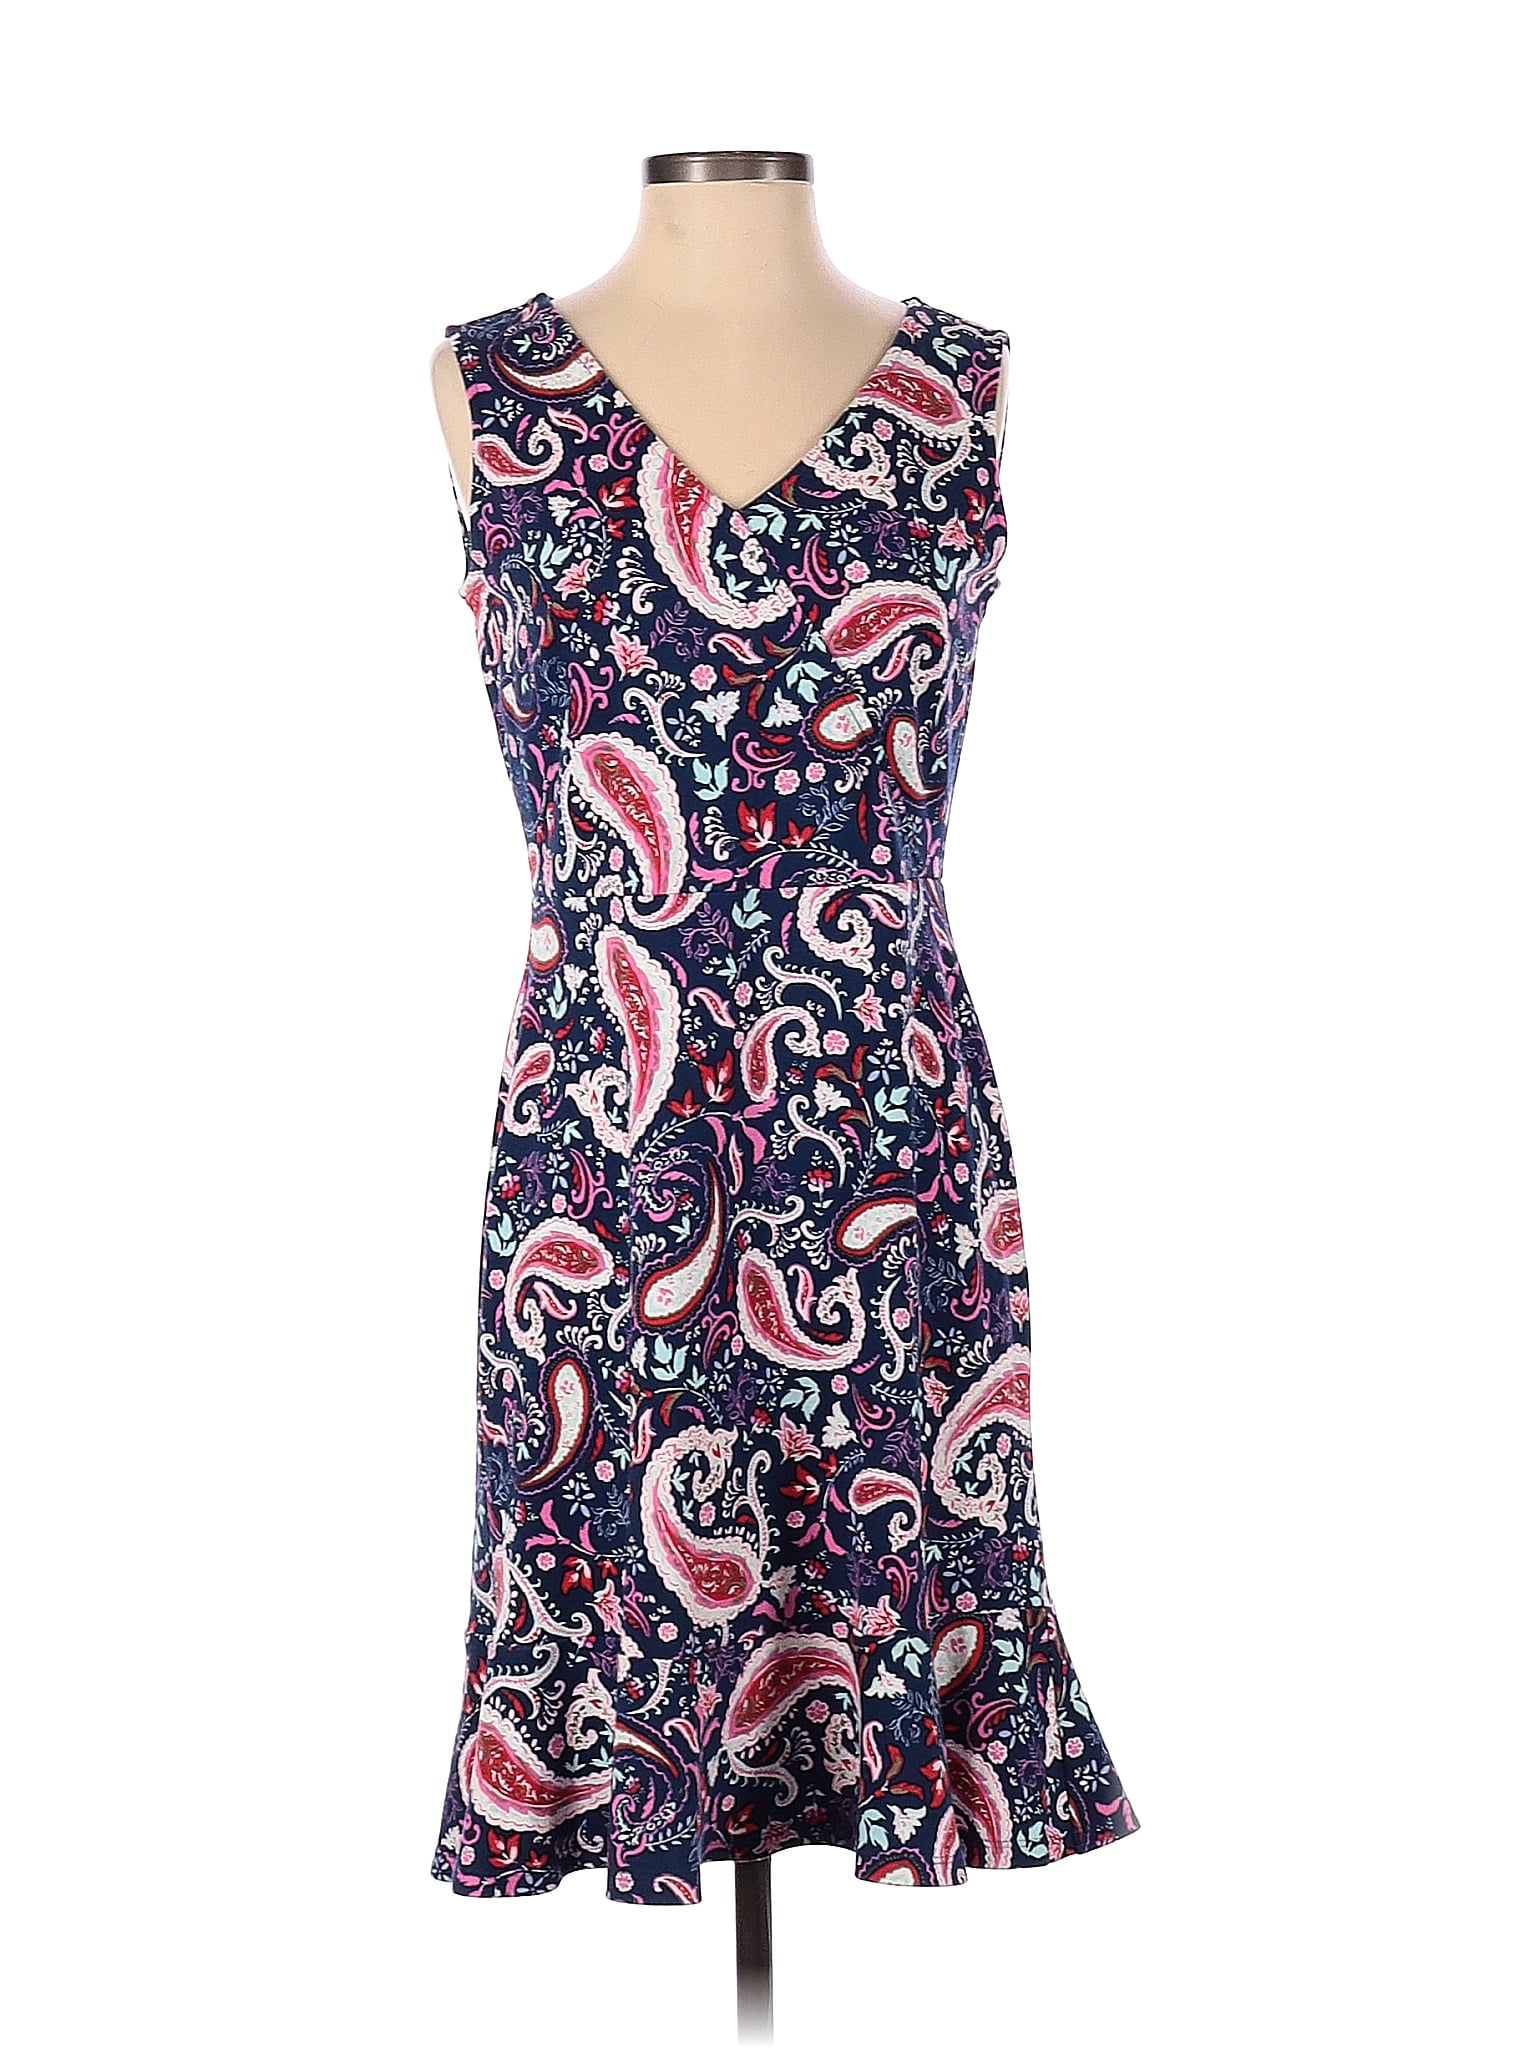 Talbots 100% Cotton Blue Casual Dress Size S (Petite) - 80% off | ThredUp